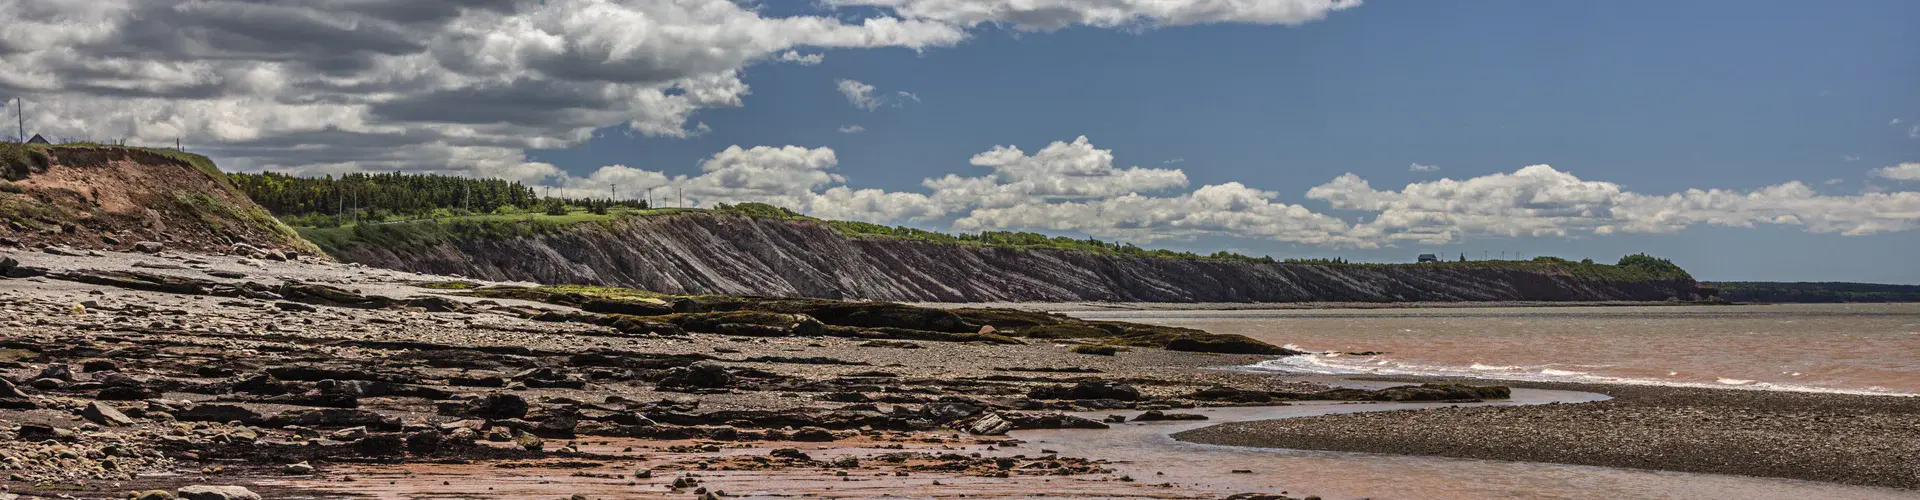 Joggins Fossil Cliffs in Nova Scotia, Canada, a site with one of the world's most complete fossil records (Credit: M. Grey/L. Nicoll/Joggins Fossil Institute, via imaggeo.egu.eu)